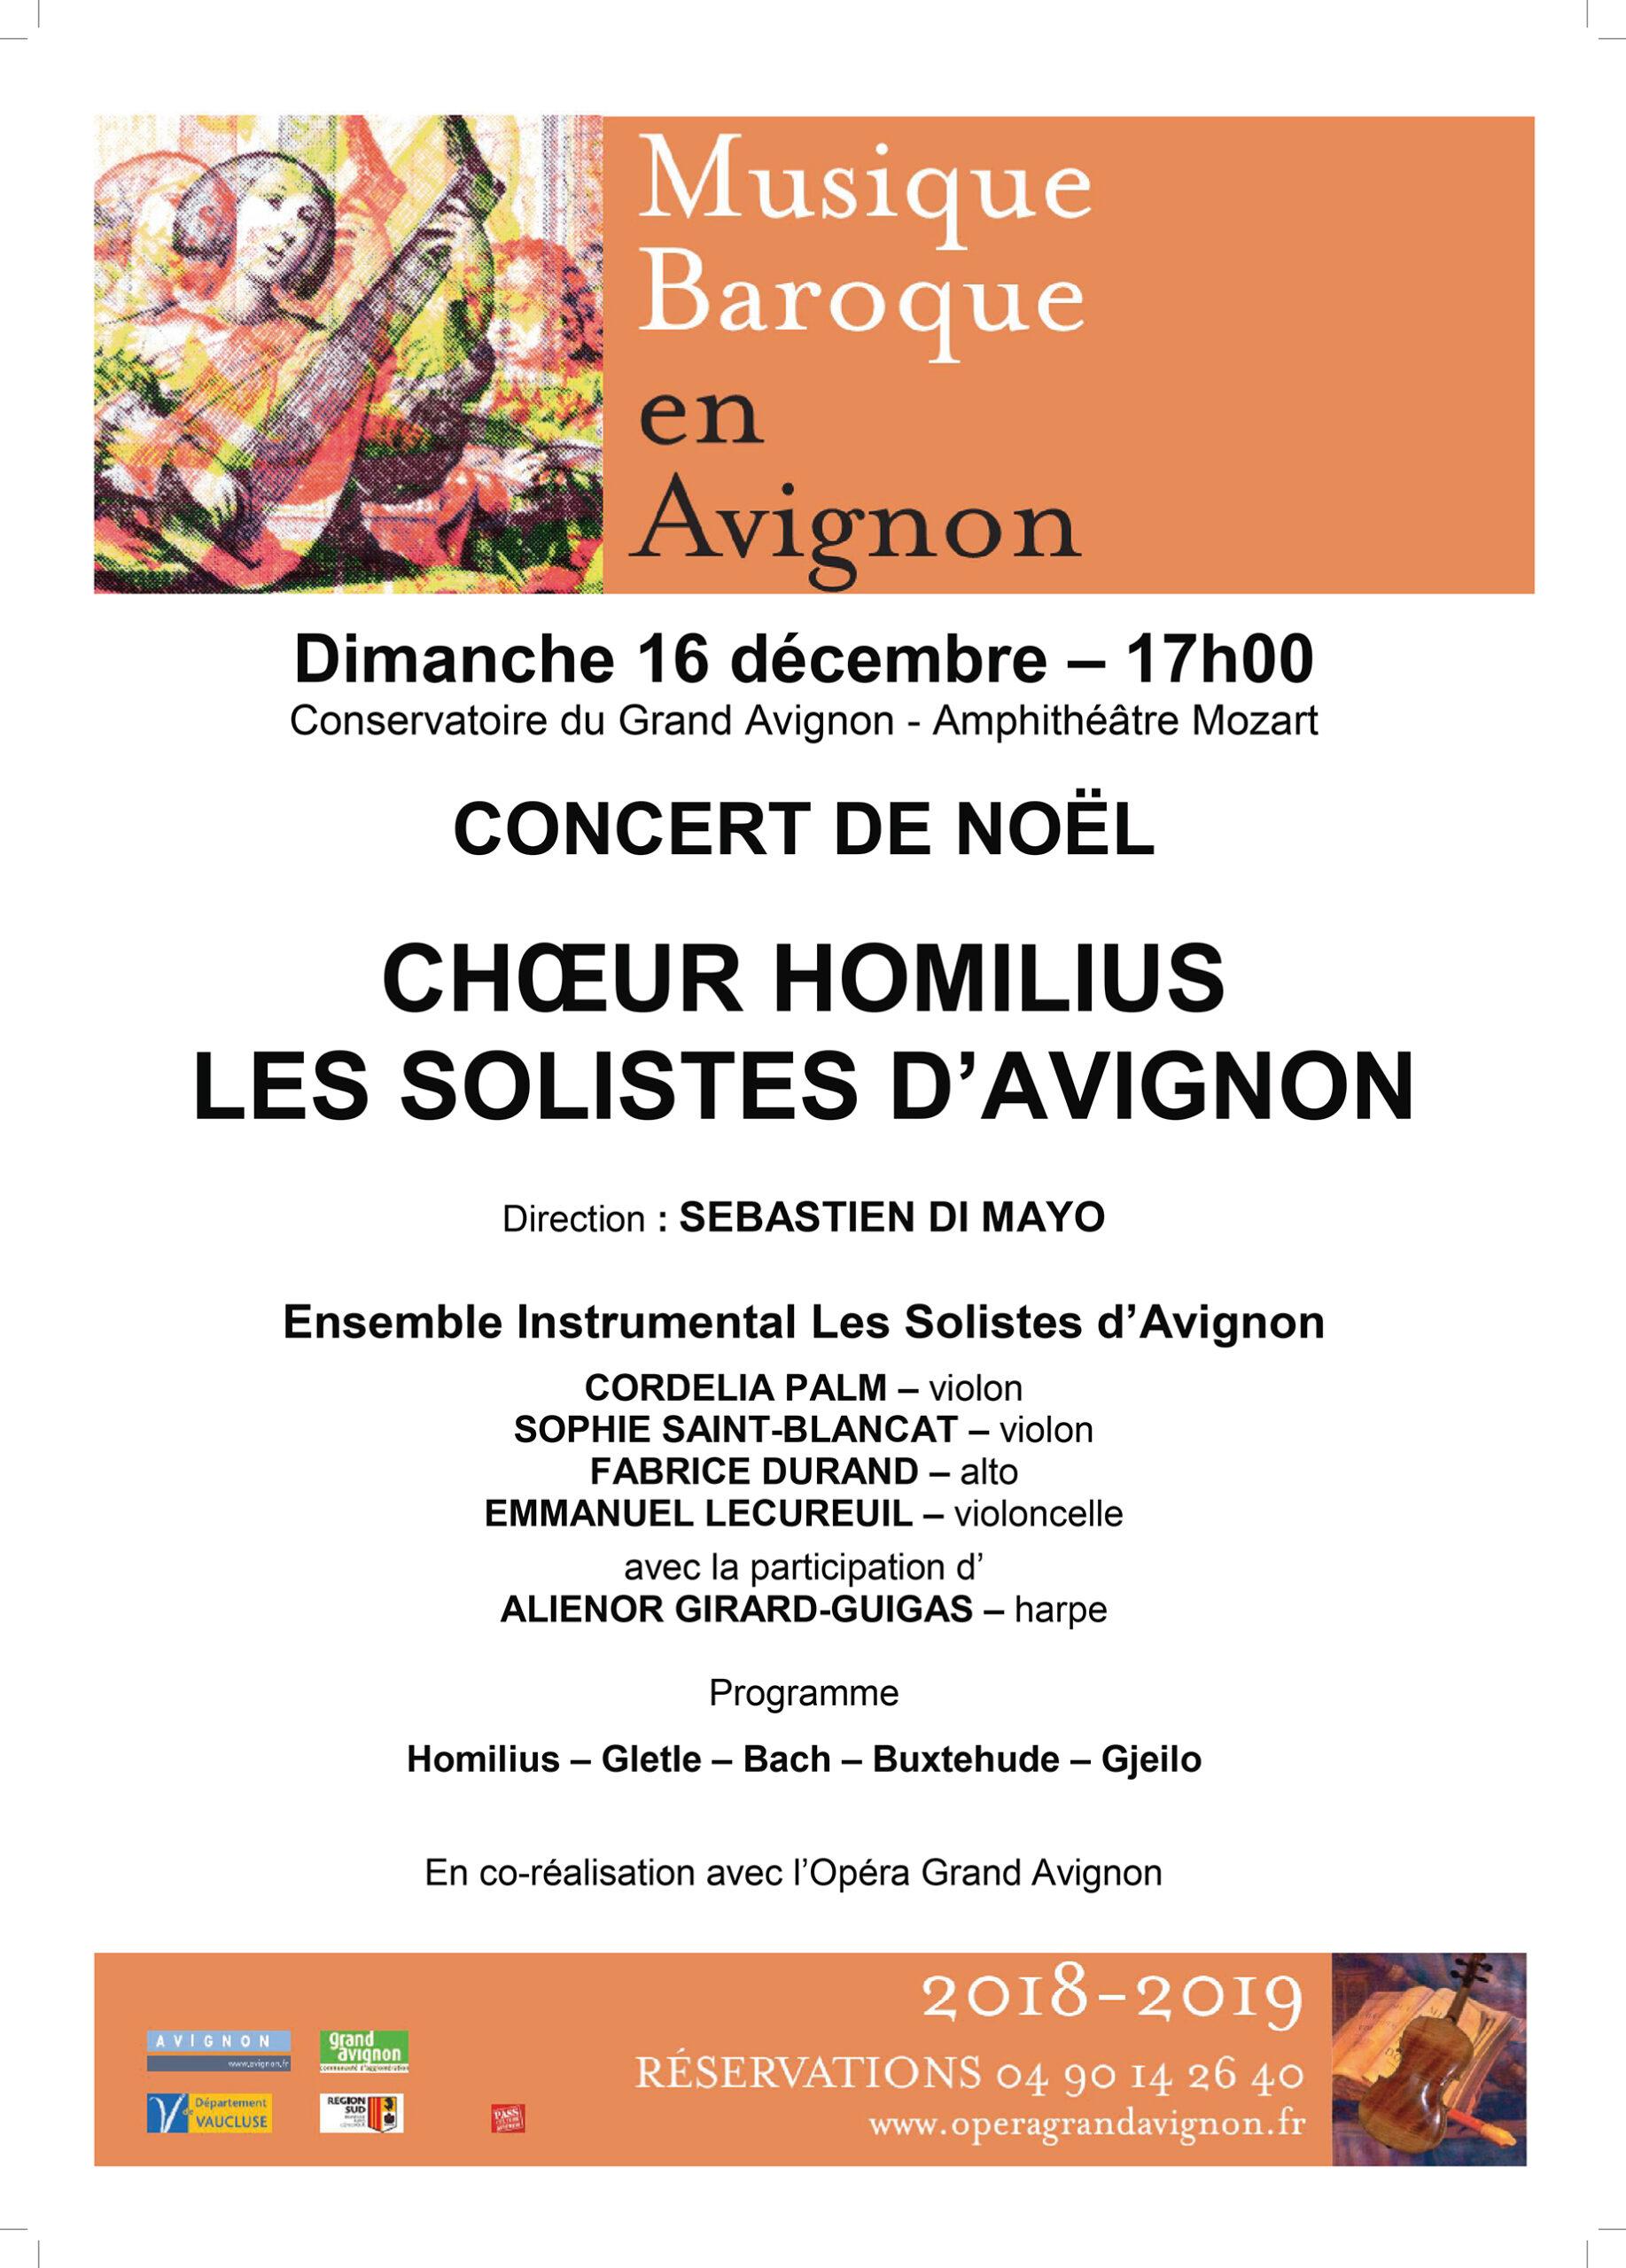 Choeur Homilius - Solistes d'Avignon